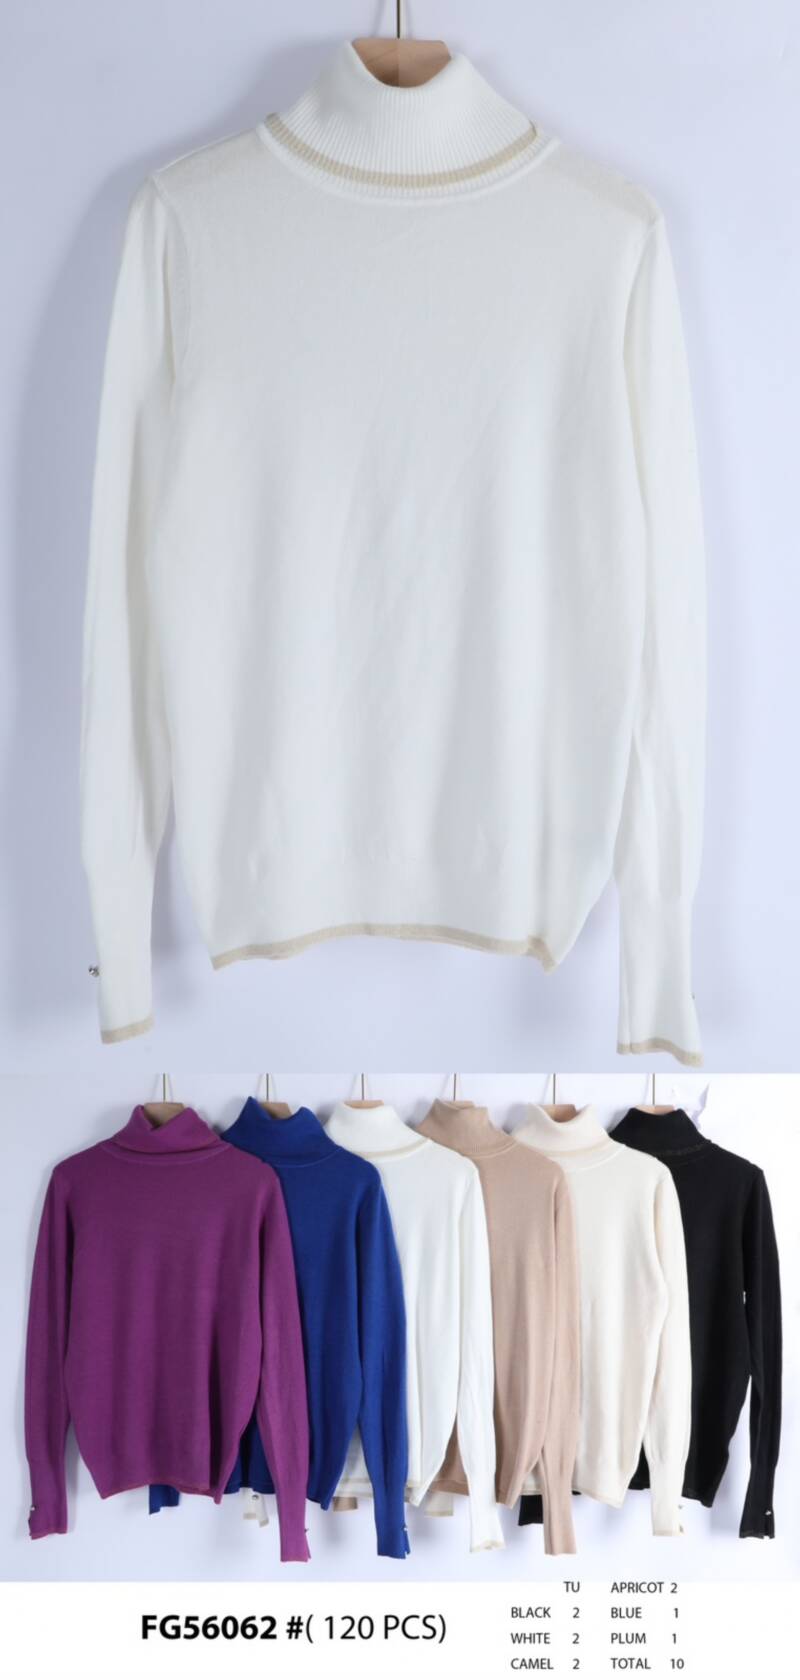  Swetry damska (Francja produkt) Roz Standard Mix kolor, Paszka 10szt